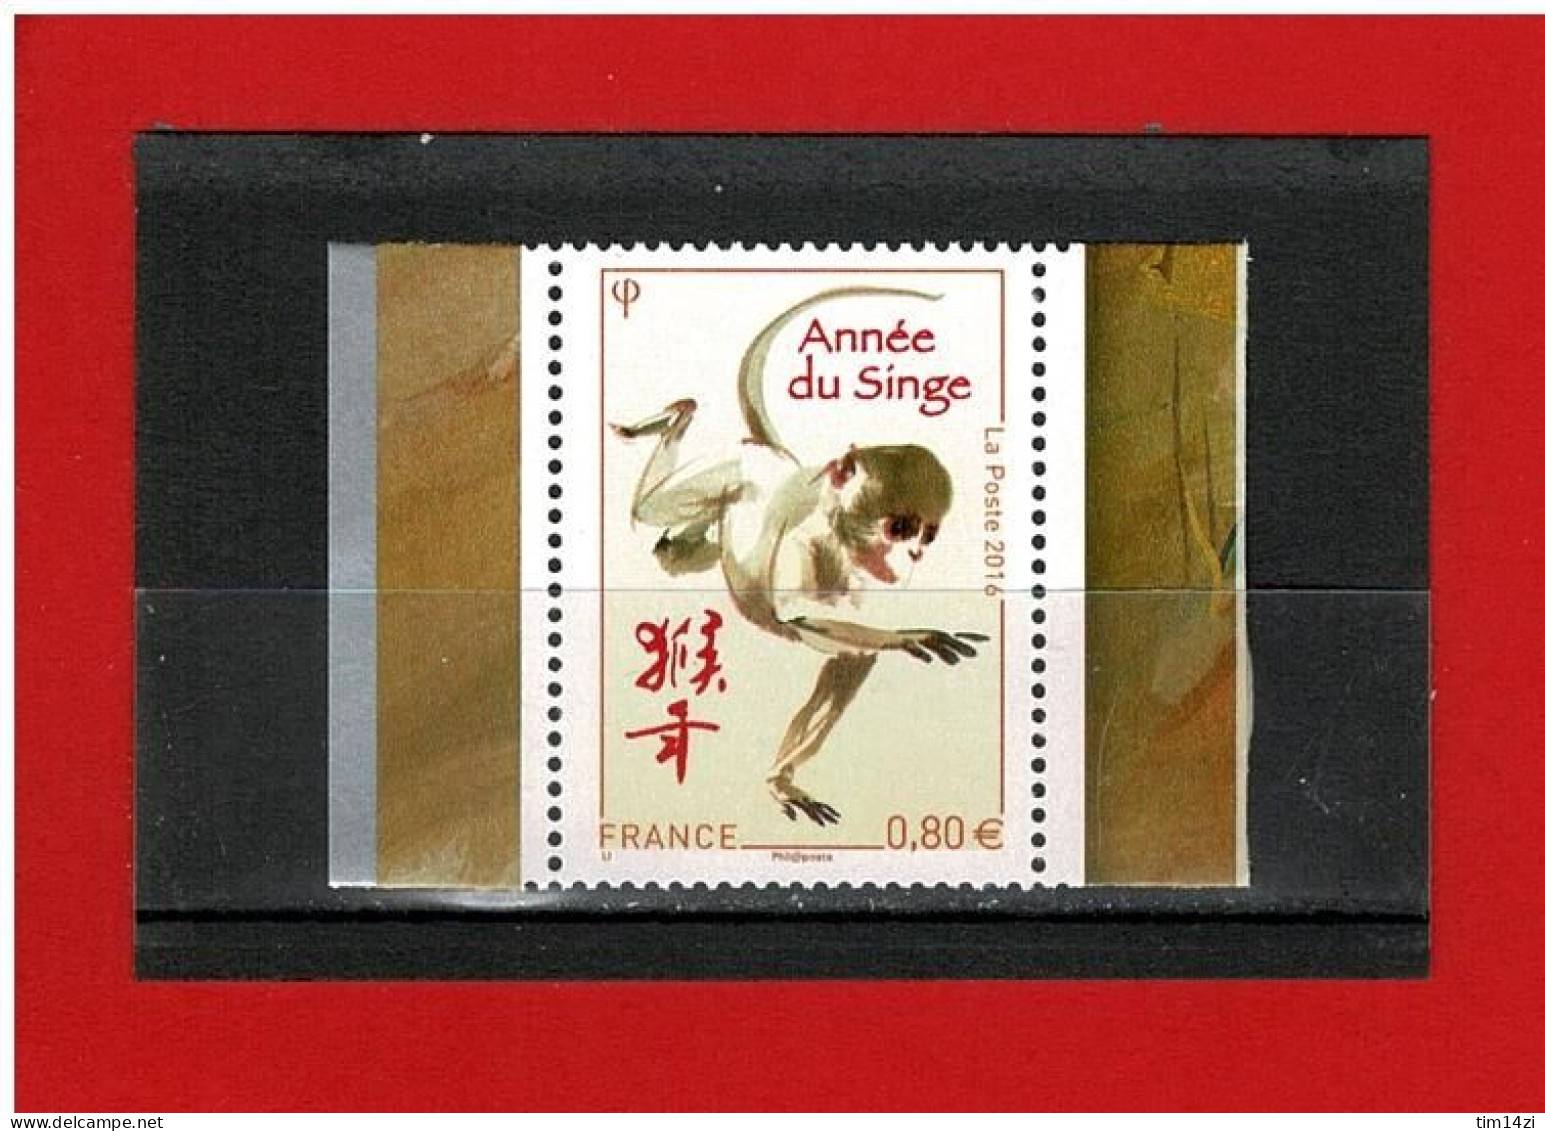 2016 - ANNEE LUNAIRE CHINOISE DU SINGE - N°5031 - NEUF** - COTE Y & T : 2.50 Euros - Neufs